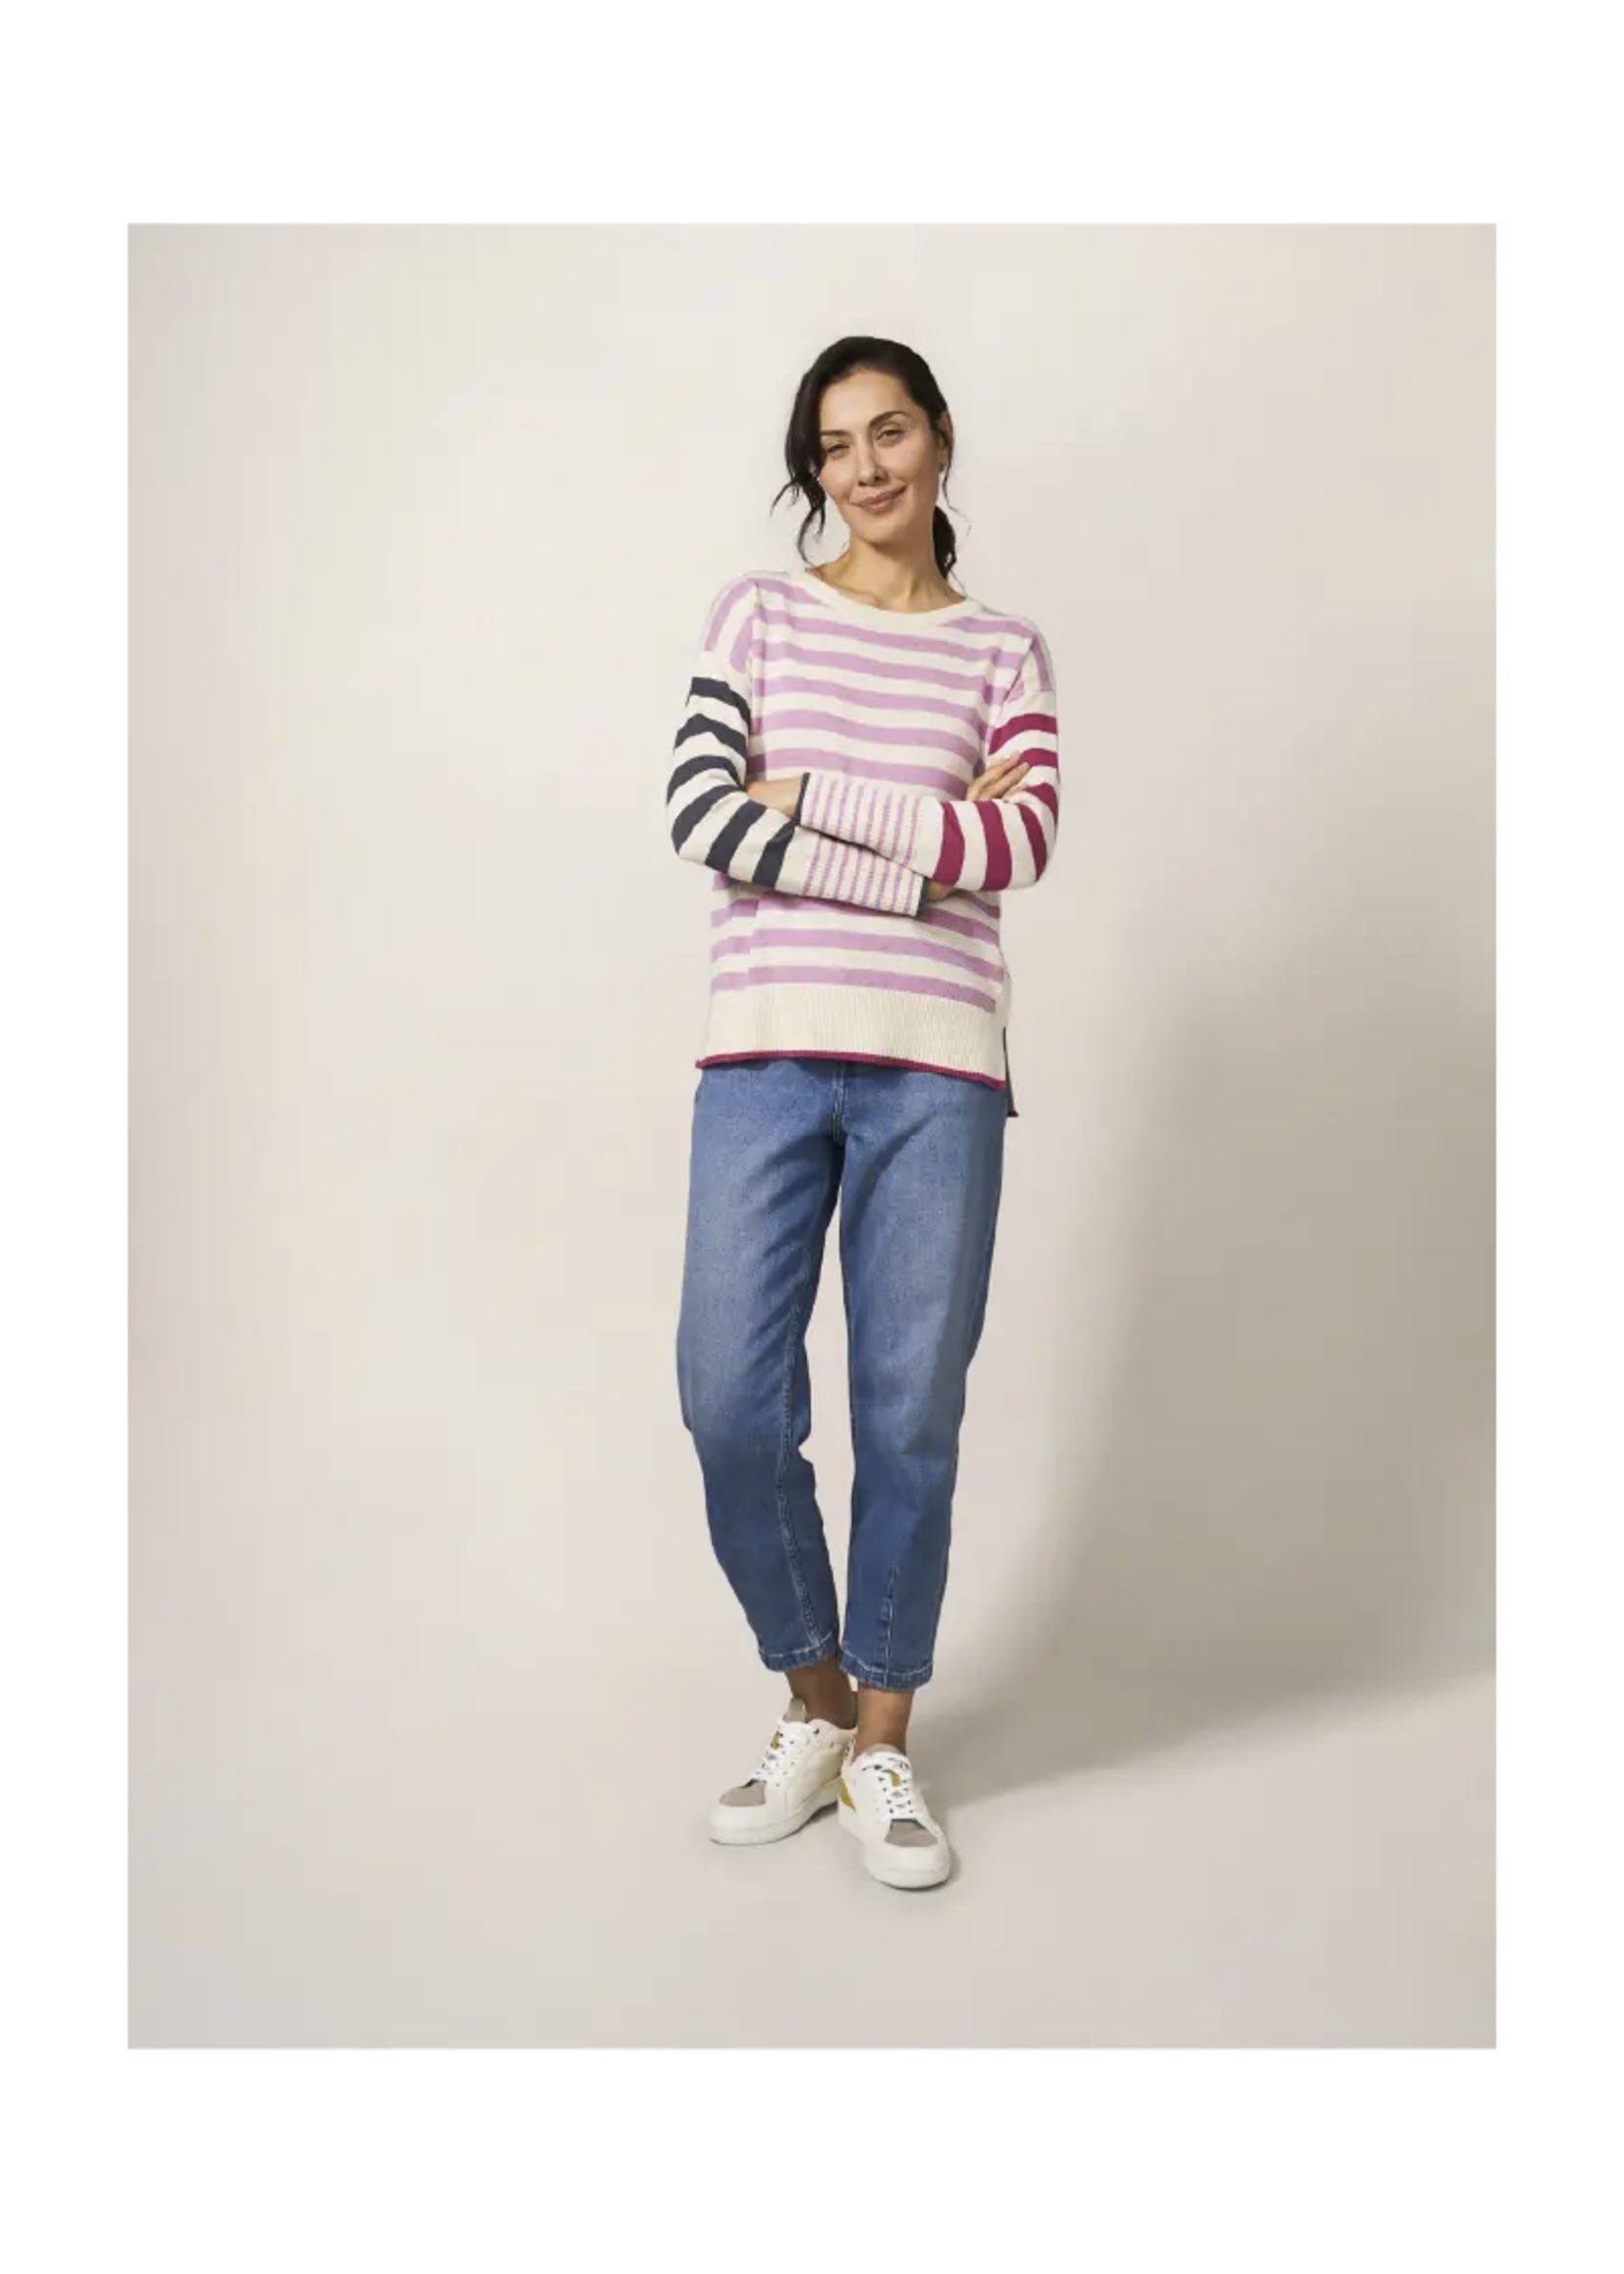 White Stuff Olive Stripe Sweater | Women's Casual Knit - espy